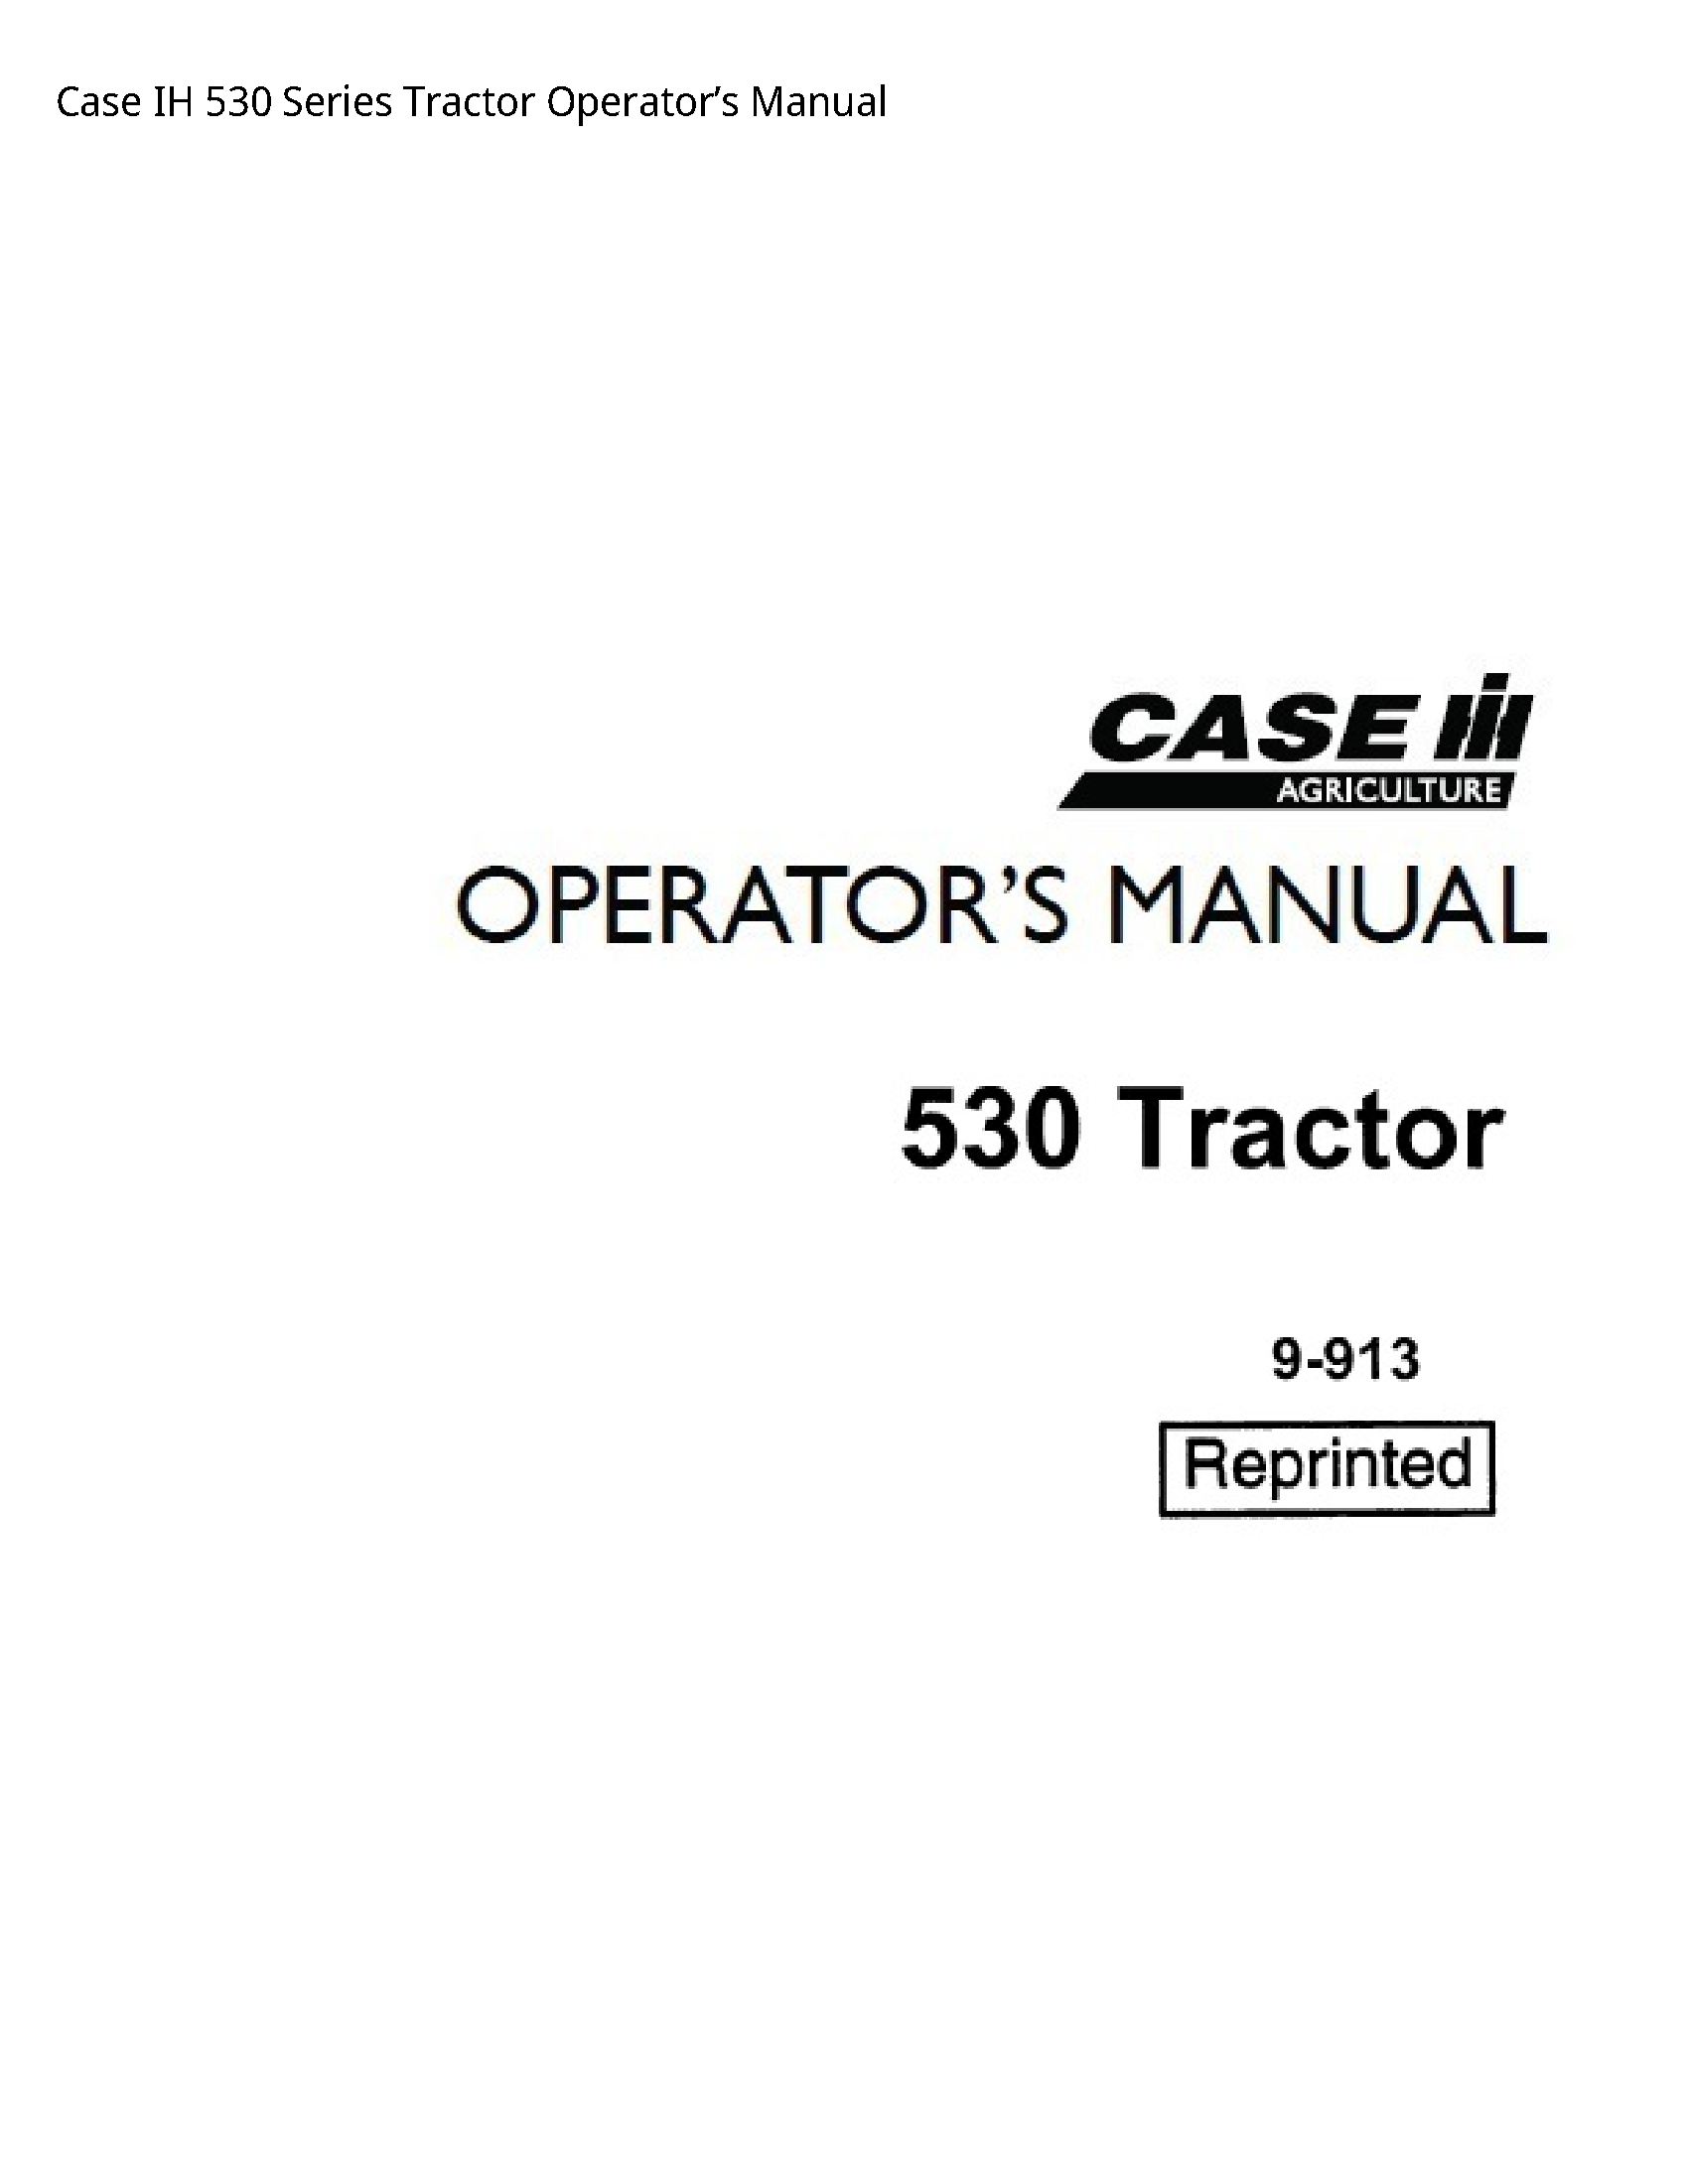 Case/Case IH 530 IH Series Tractor Operator’s manual